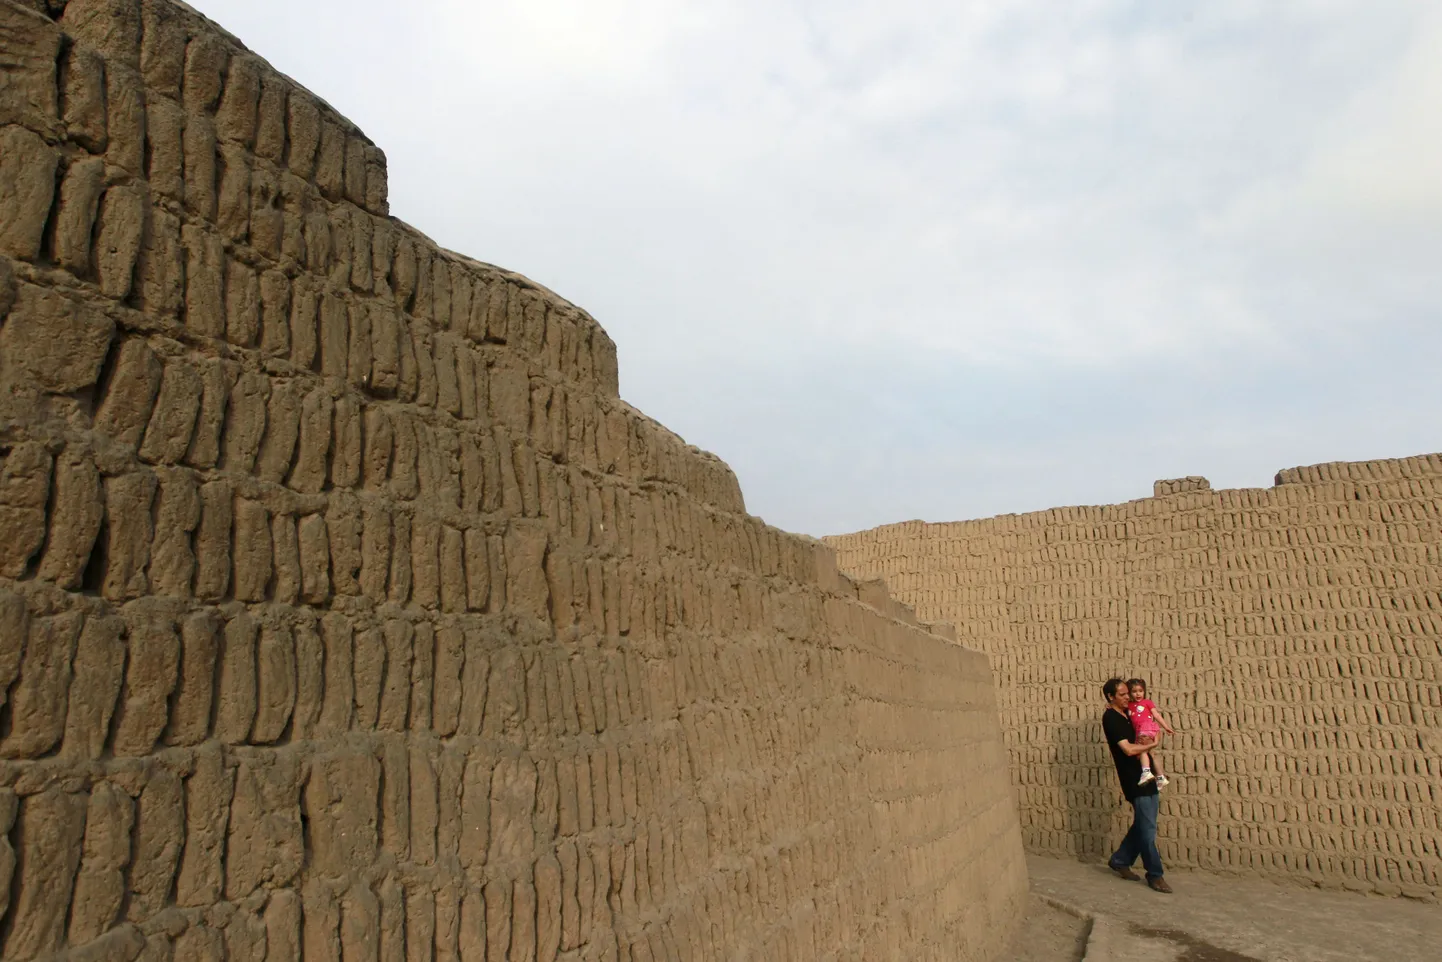 Peruust leiti 5000 aasta vanune tempel